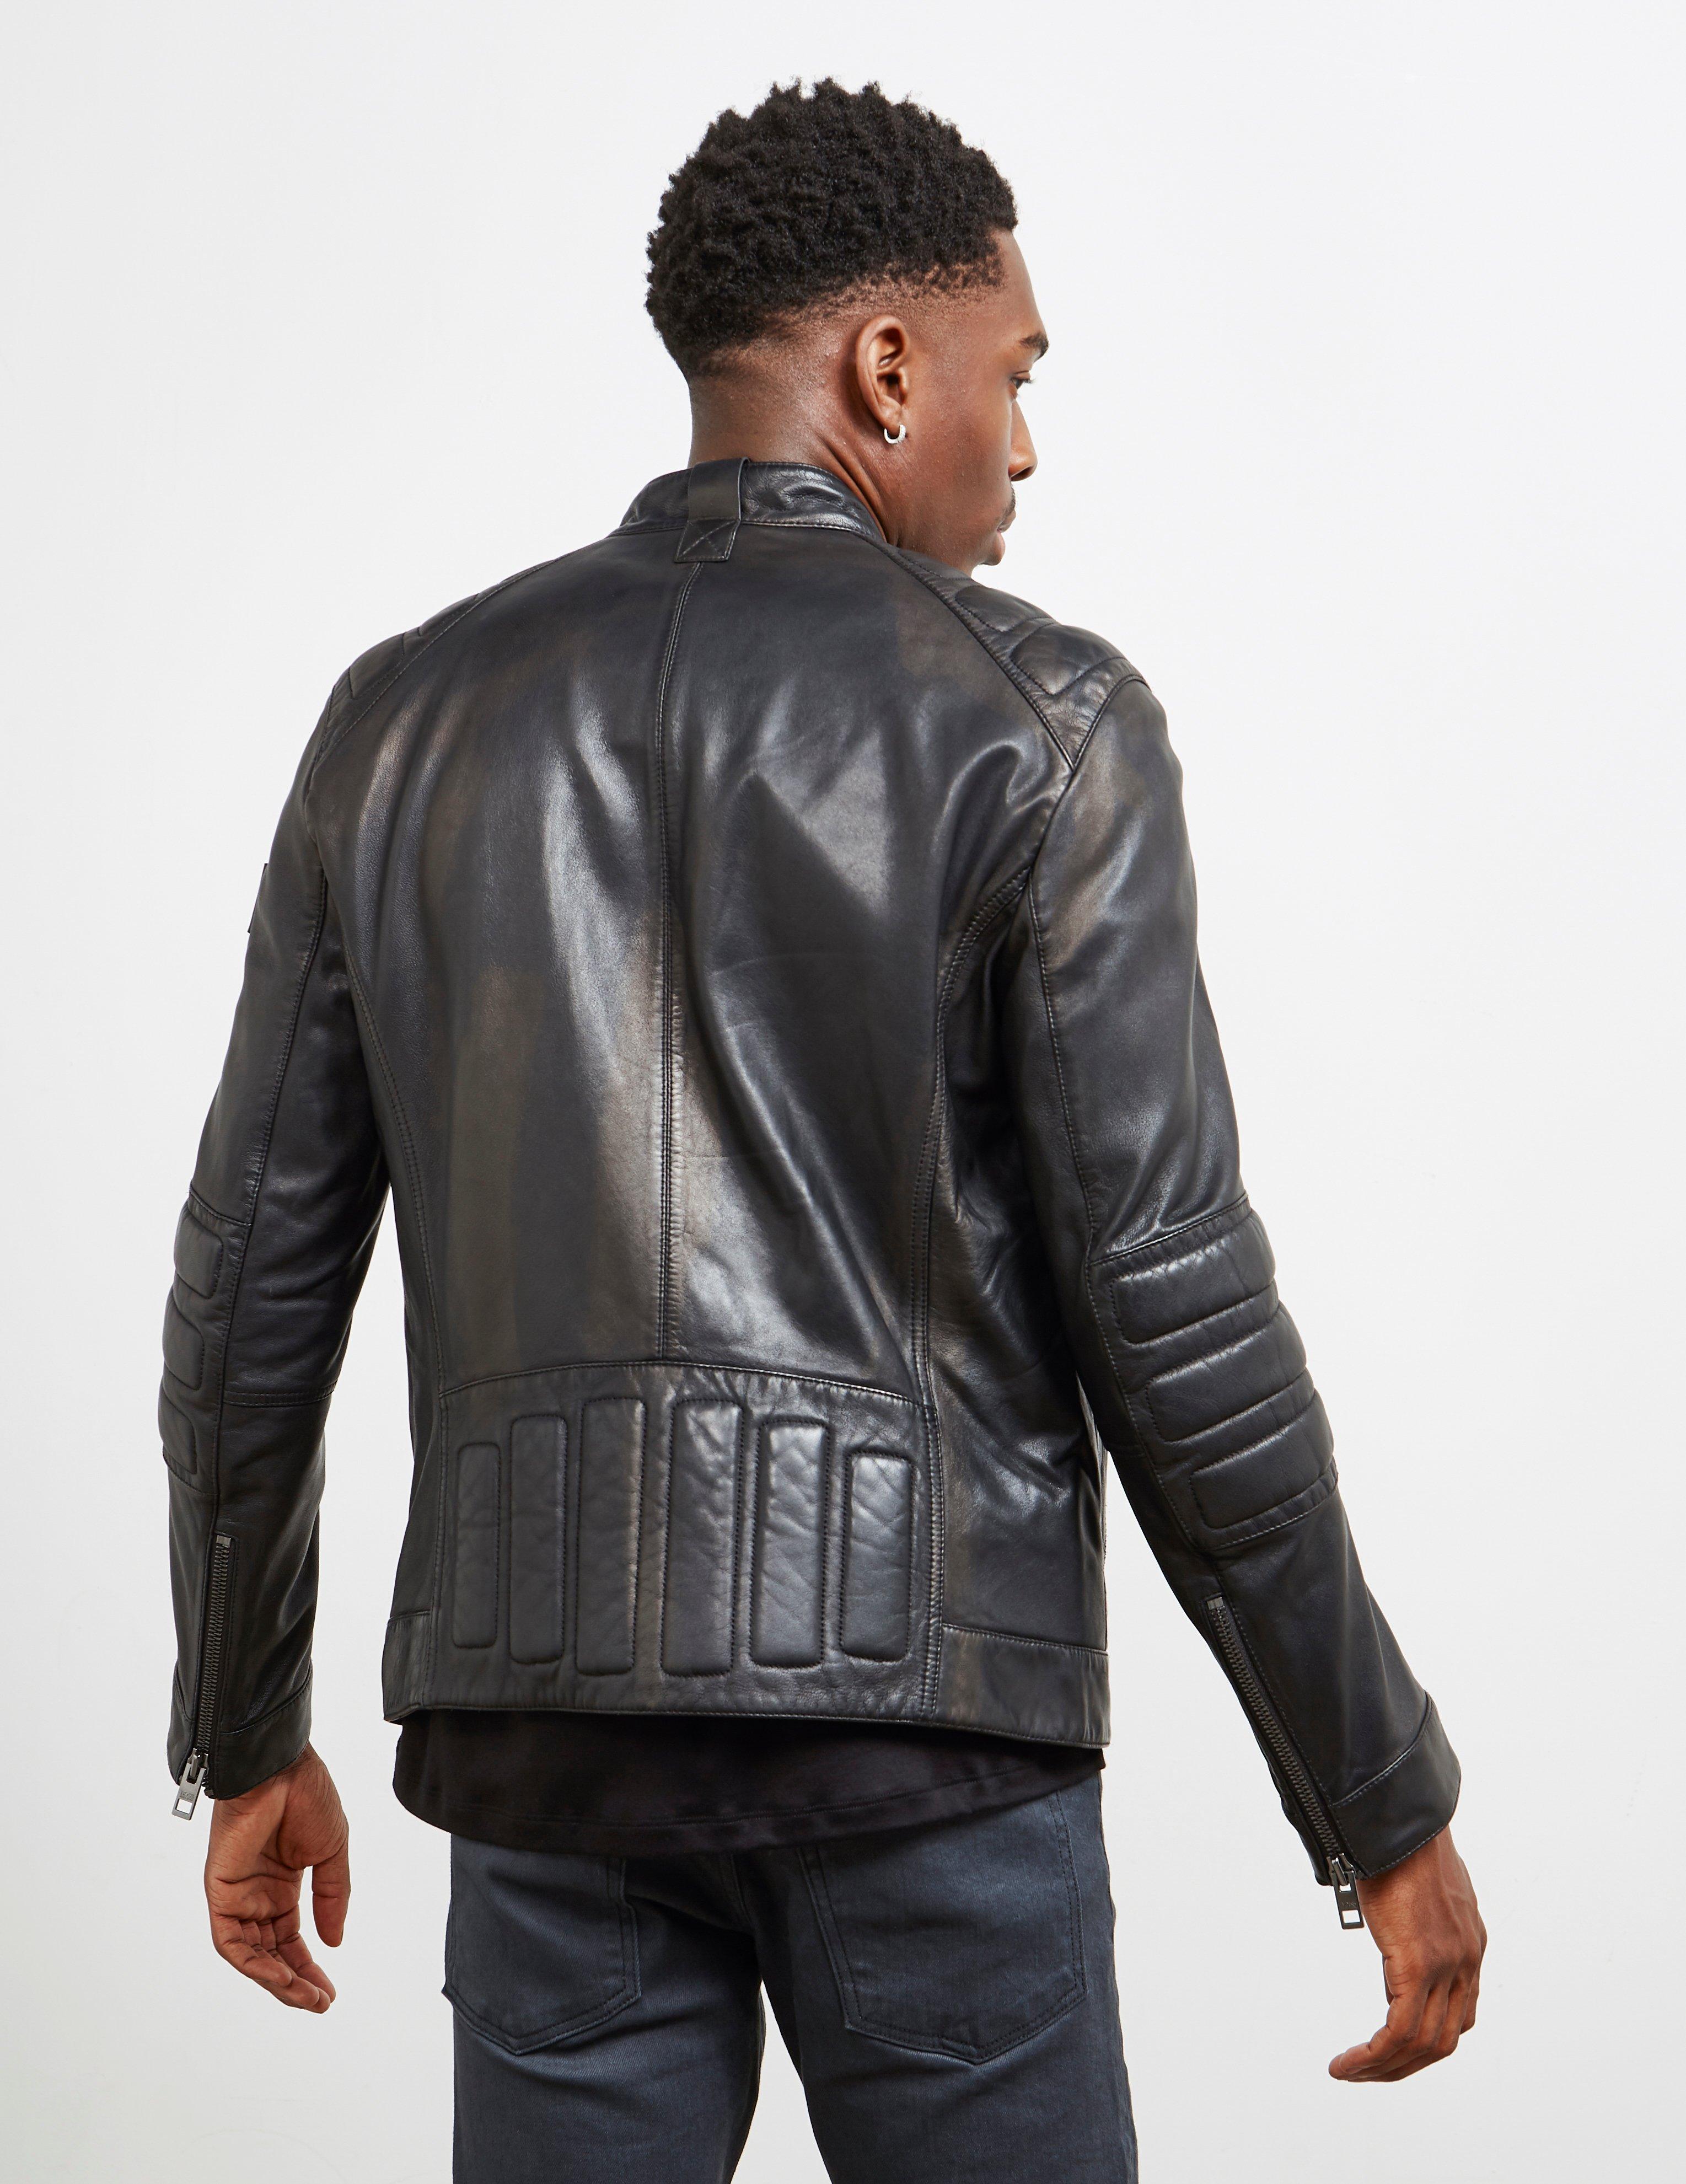 Hugo Boss Jagson Leather Jacket Netherlands, SAVE 30% - lutheranems.com